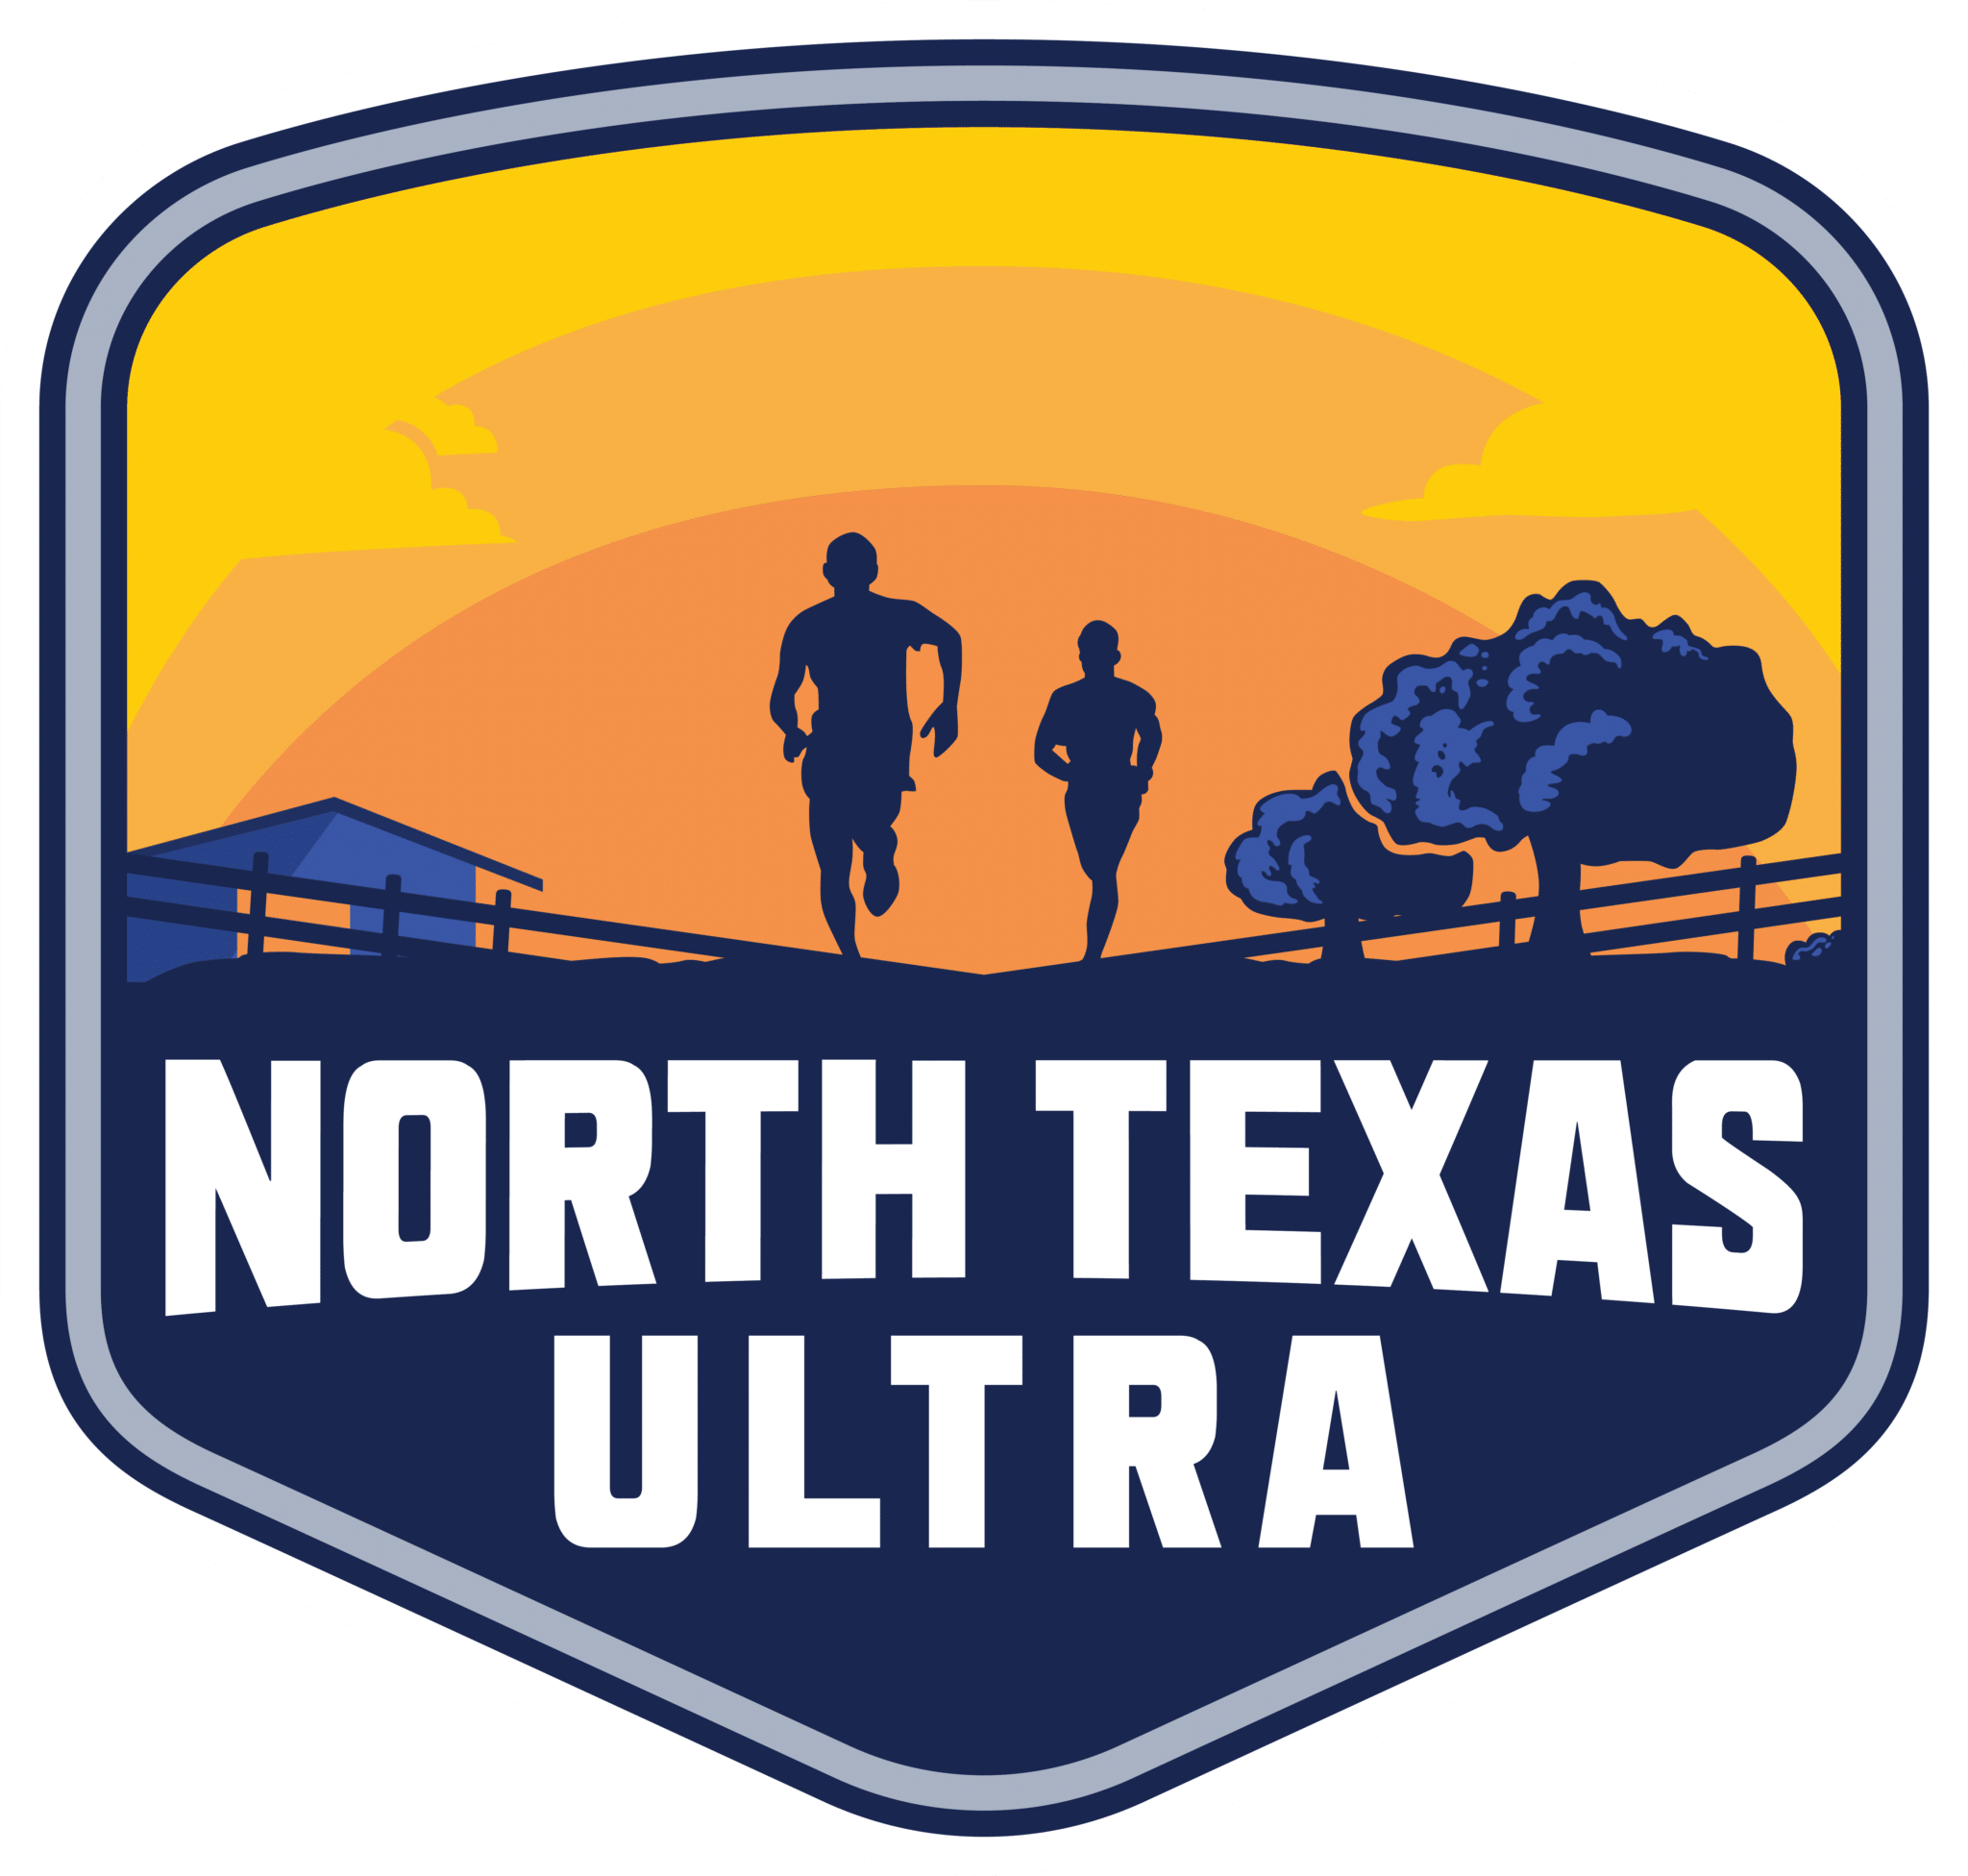 north-texas-ultra-logo_lsfuC3j-1